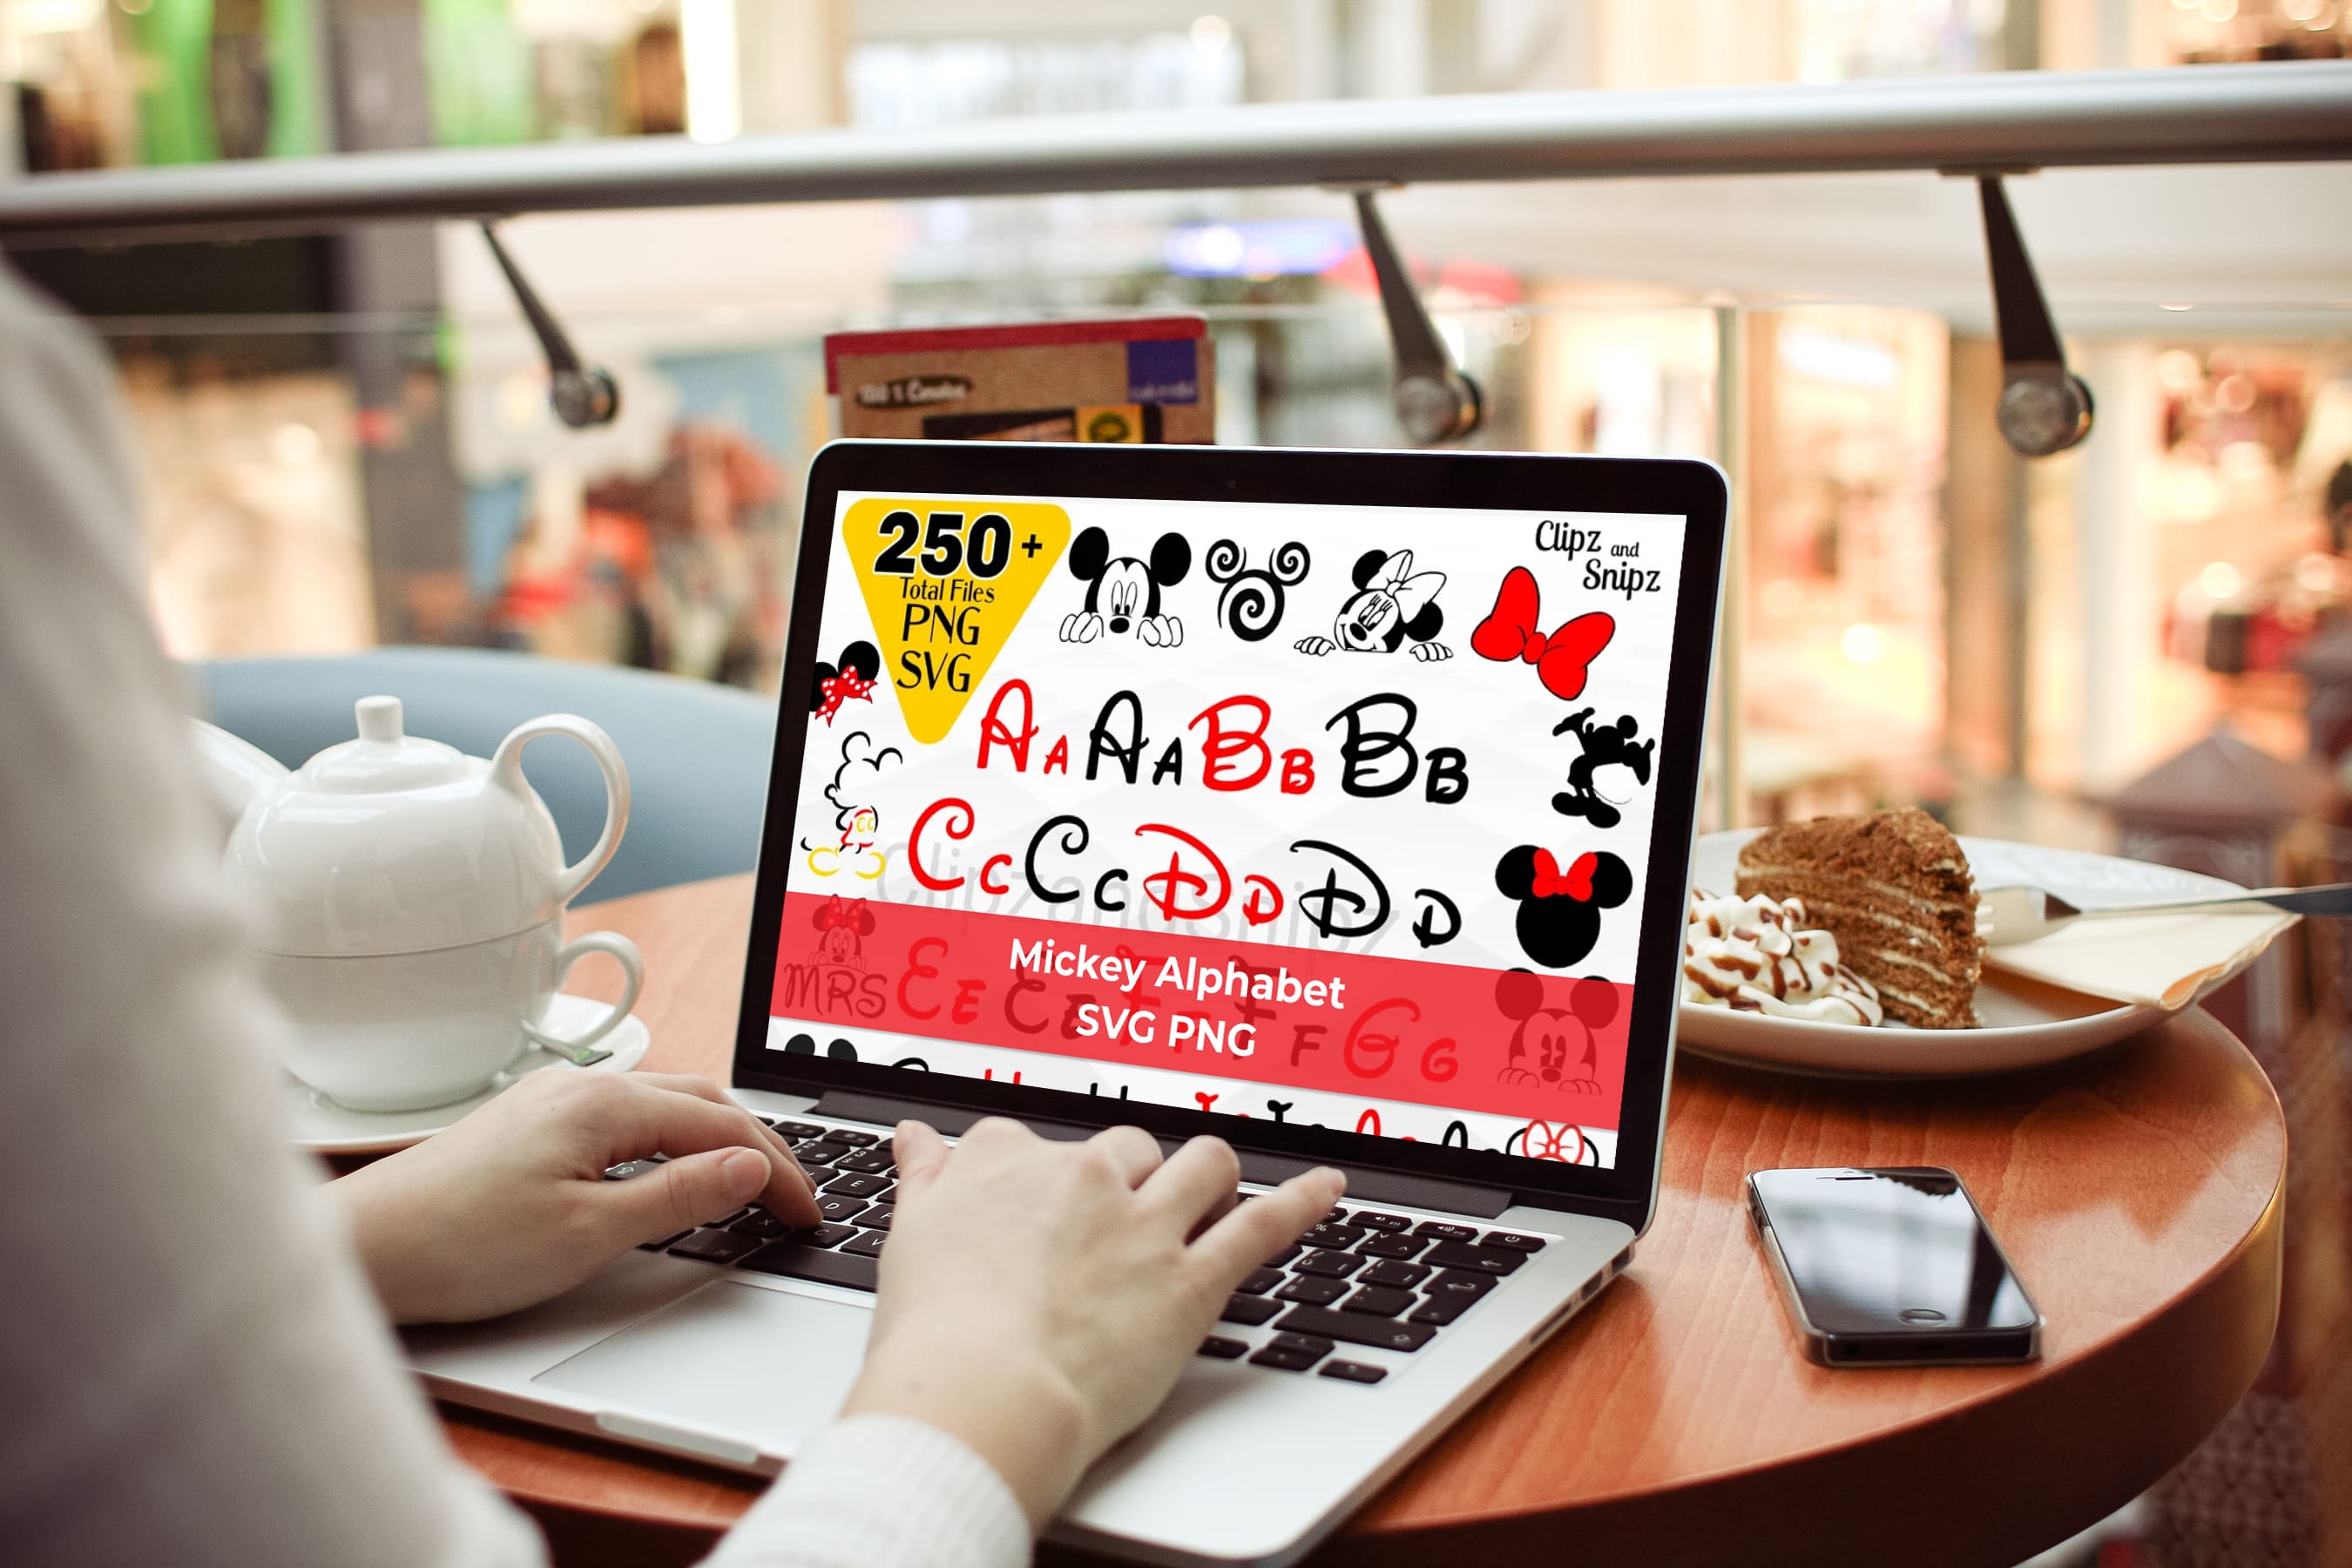 Laptop - Mickey Alphabet SVG PNG Clipart.